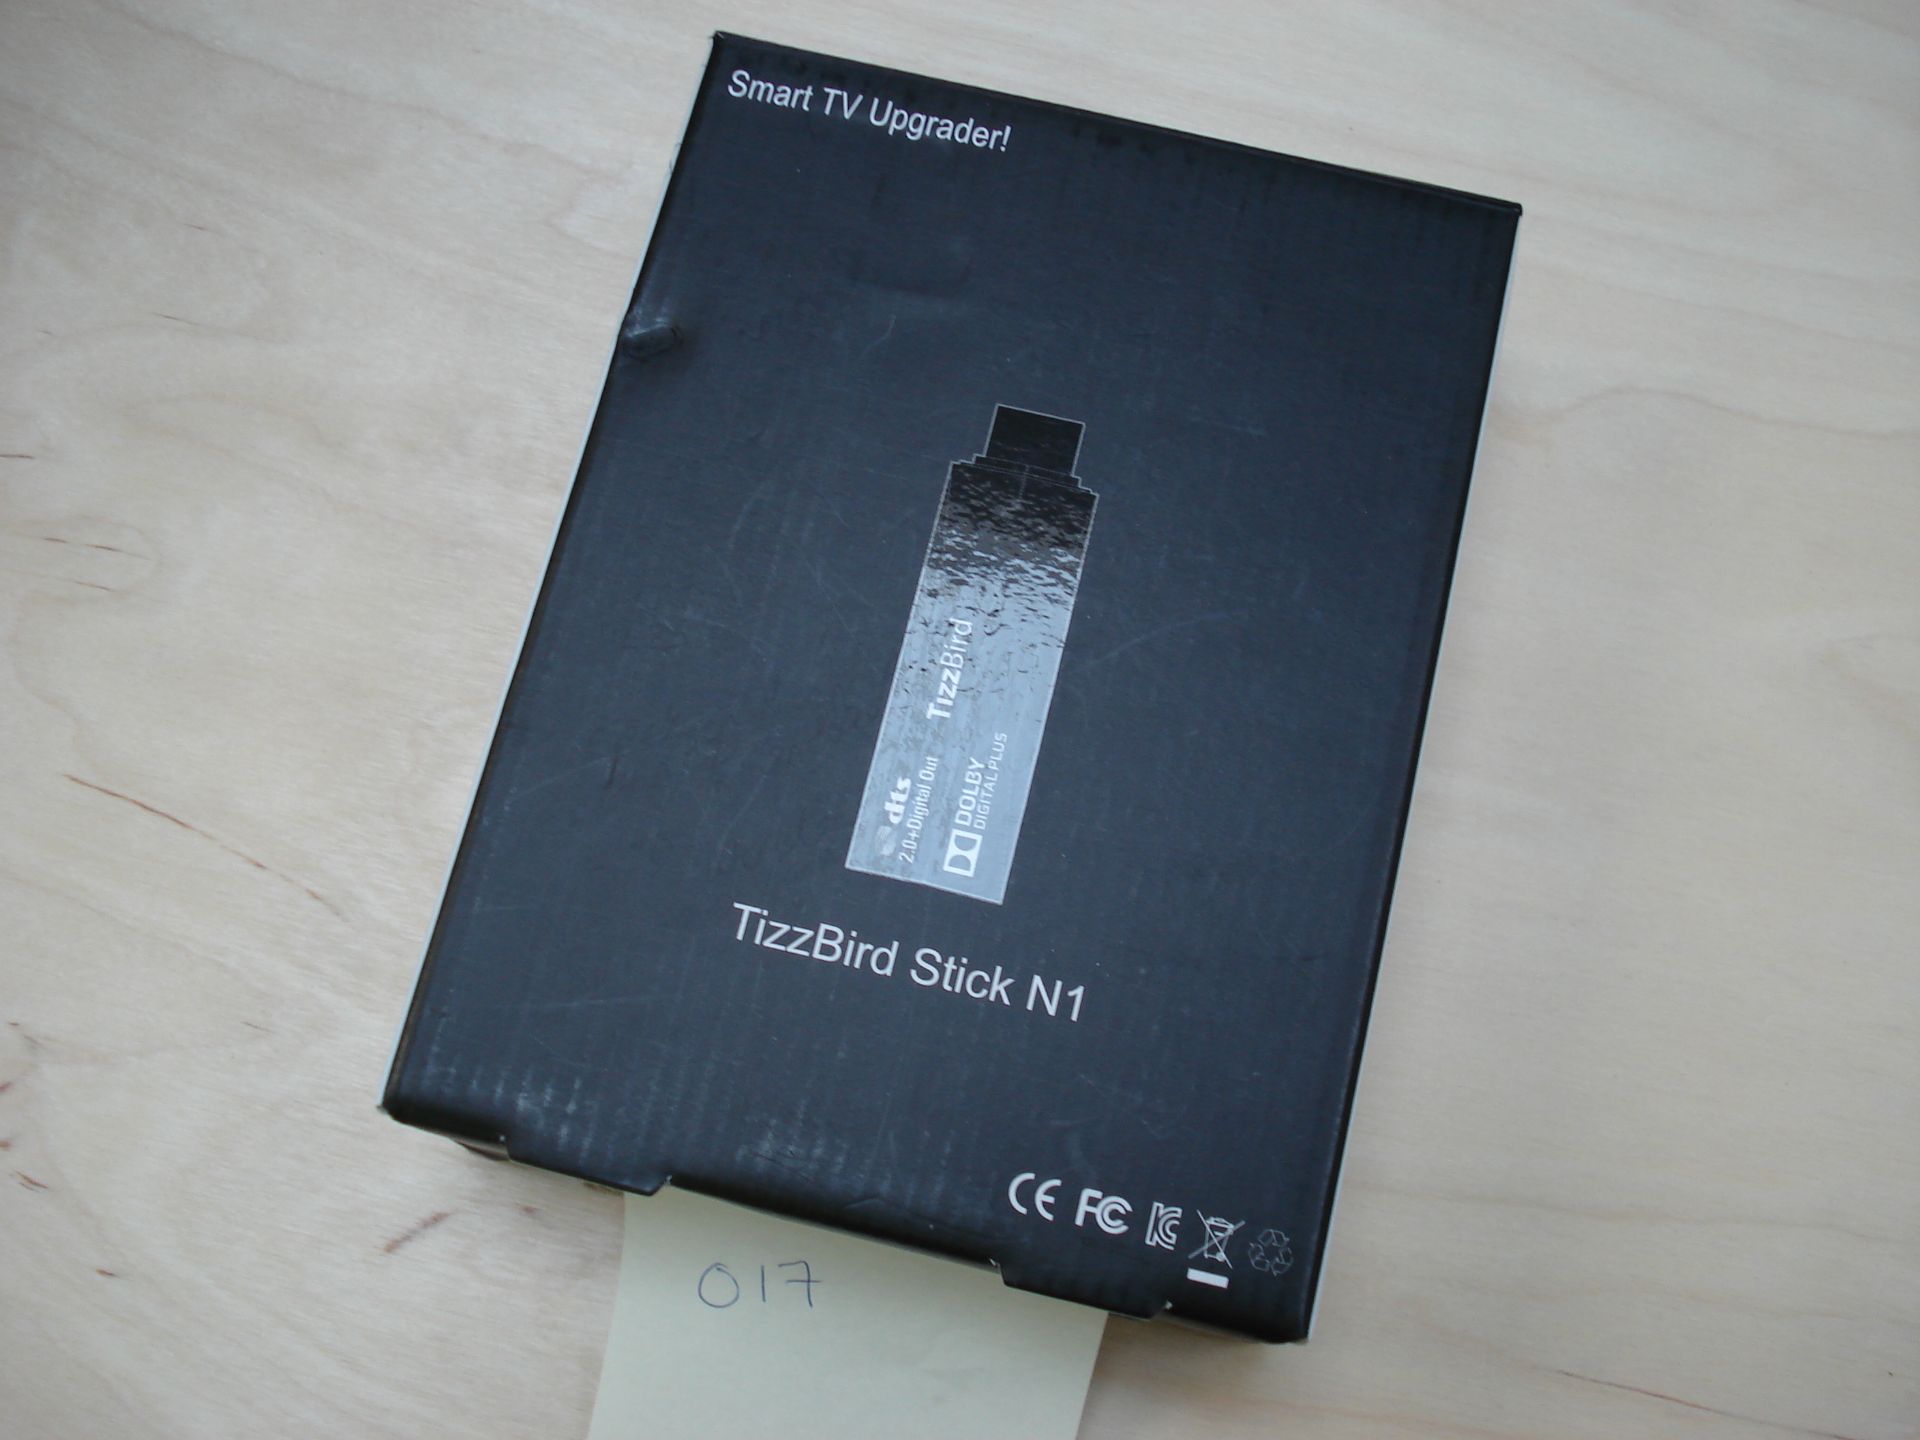 TizzBird Stick N1 Smart TV upgrader.